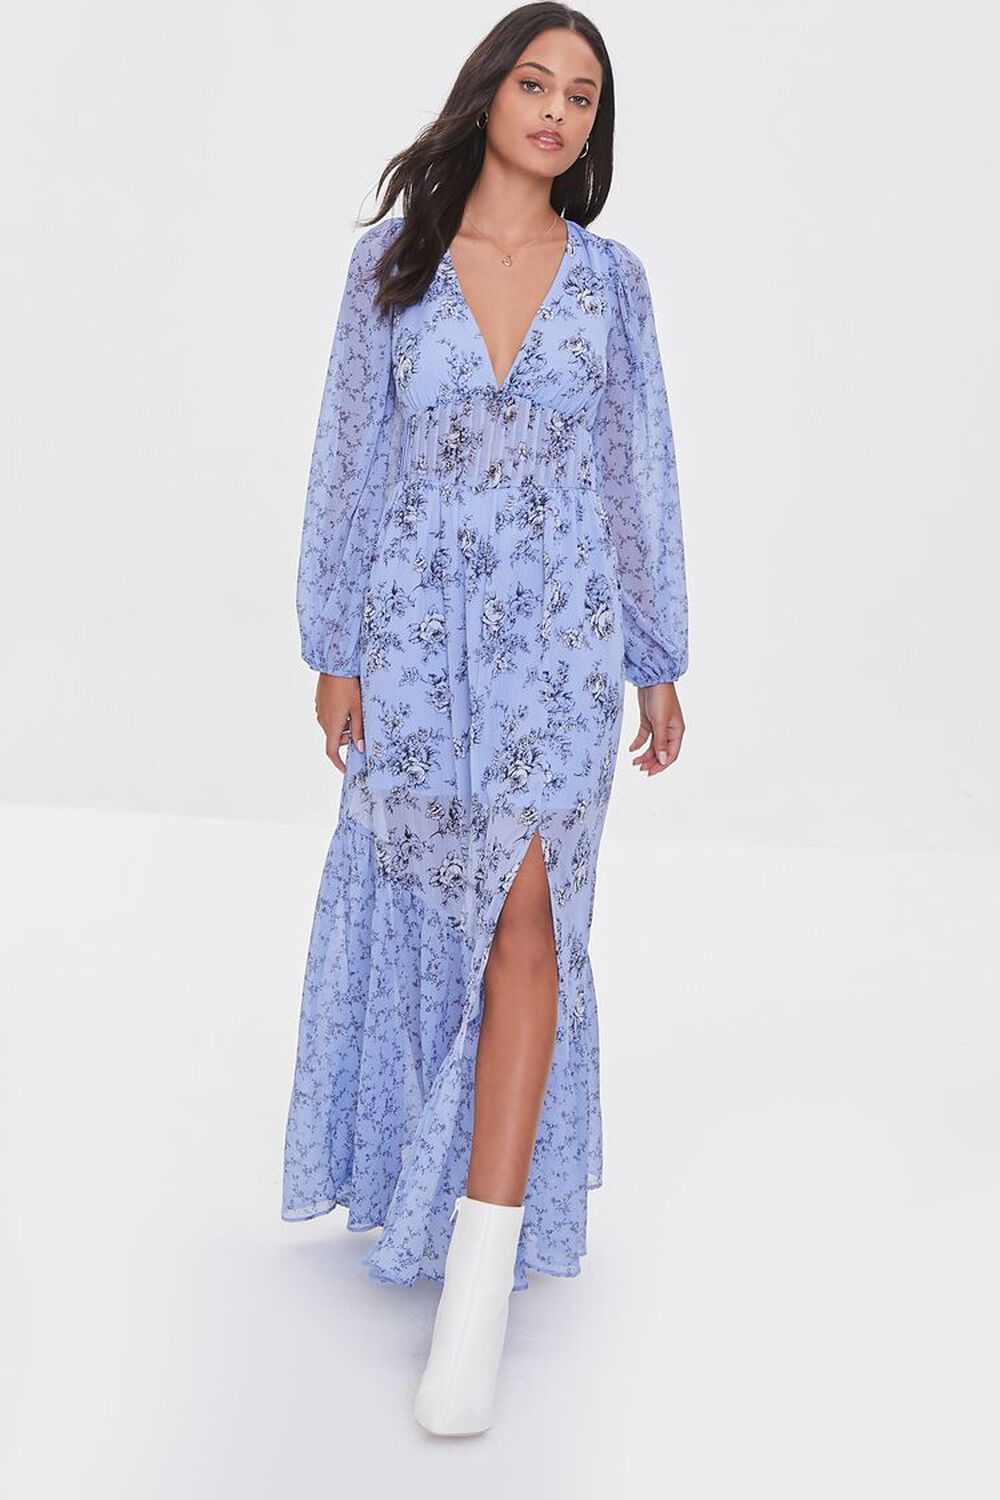 BLUE/MULTI Floral Print Cutout Maxi Dress, image 1